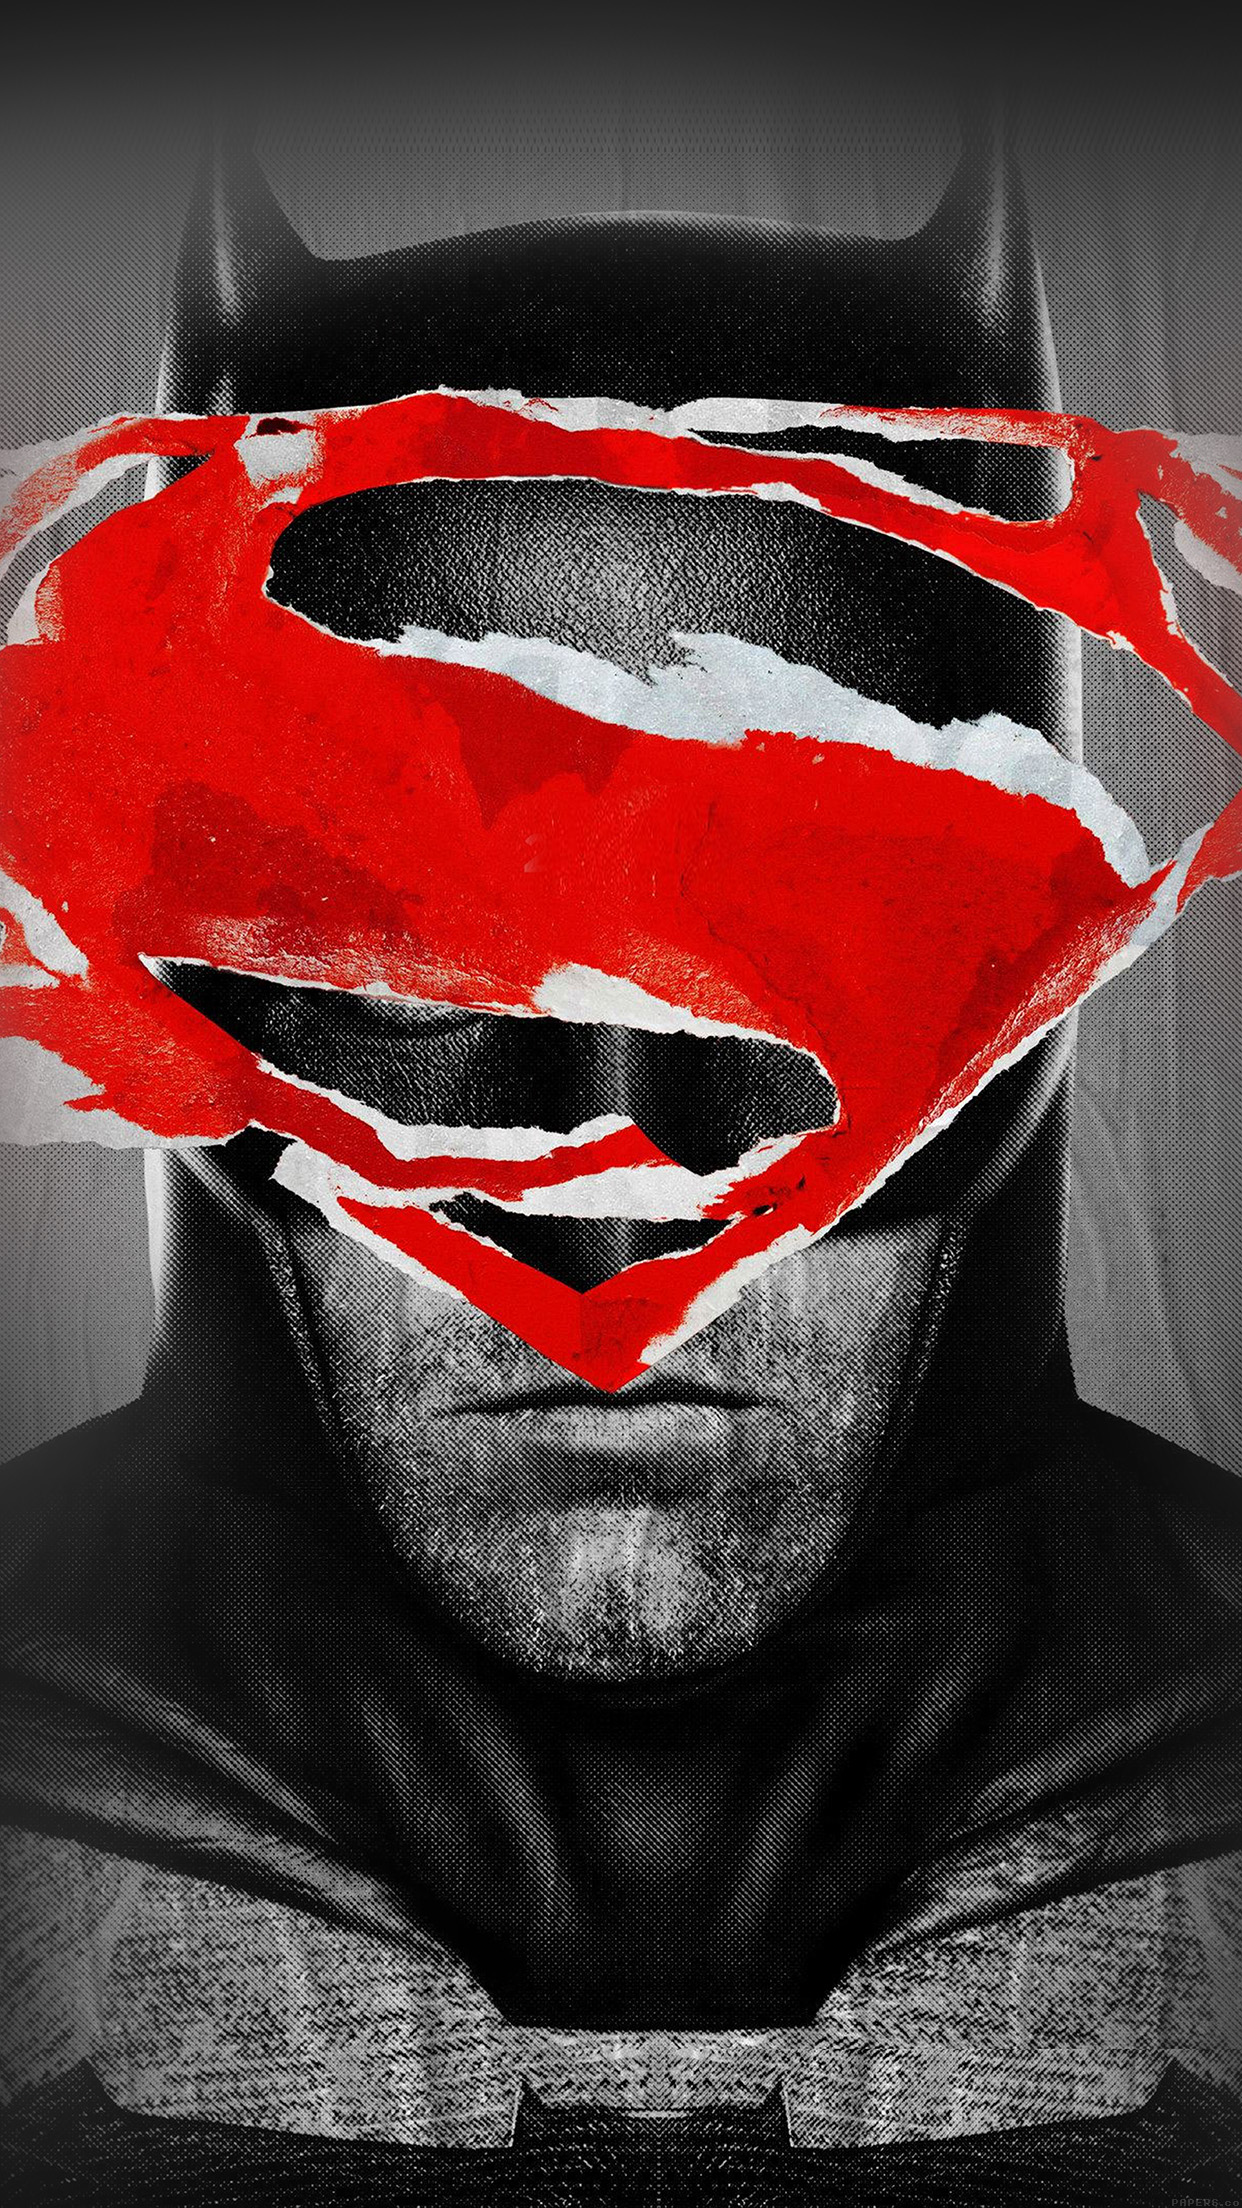 Batman Superman Poster Art Film Hero Android wallpaper